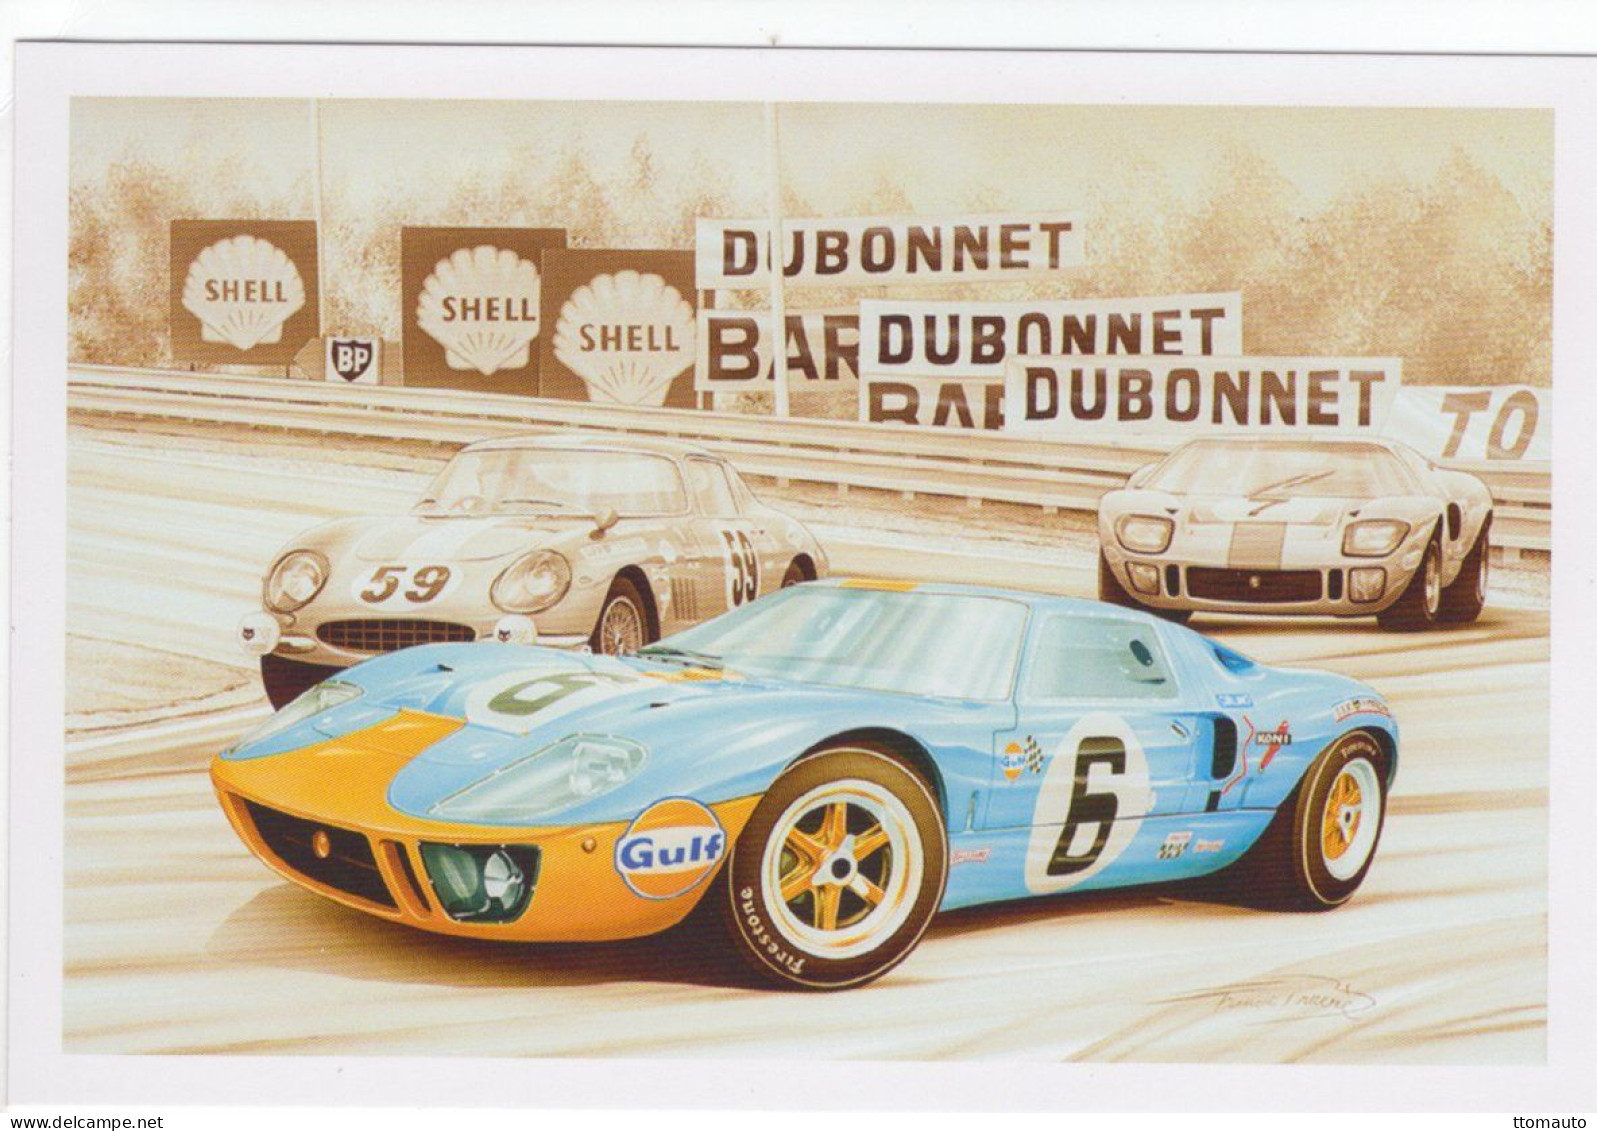 24 Heures Du Mans 1969 - Ford GT40 - Pilotes: Jacky Ickx/Jackie Oliver -  Dessin De Francois Bruere  -  CPM - Le Mans